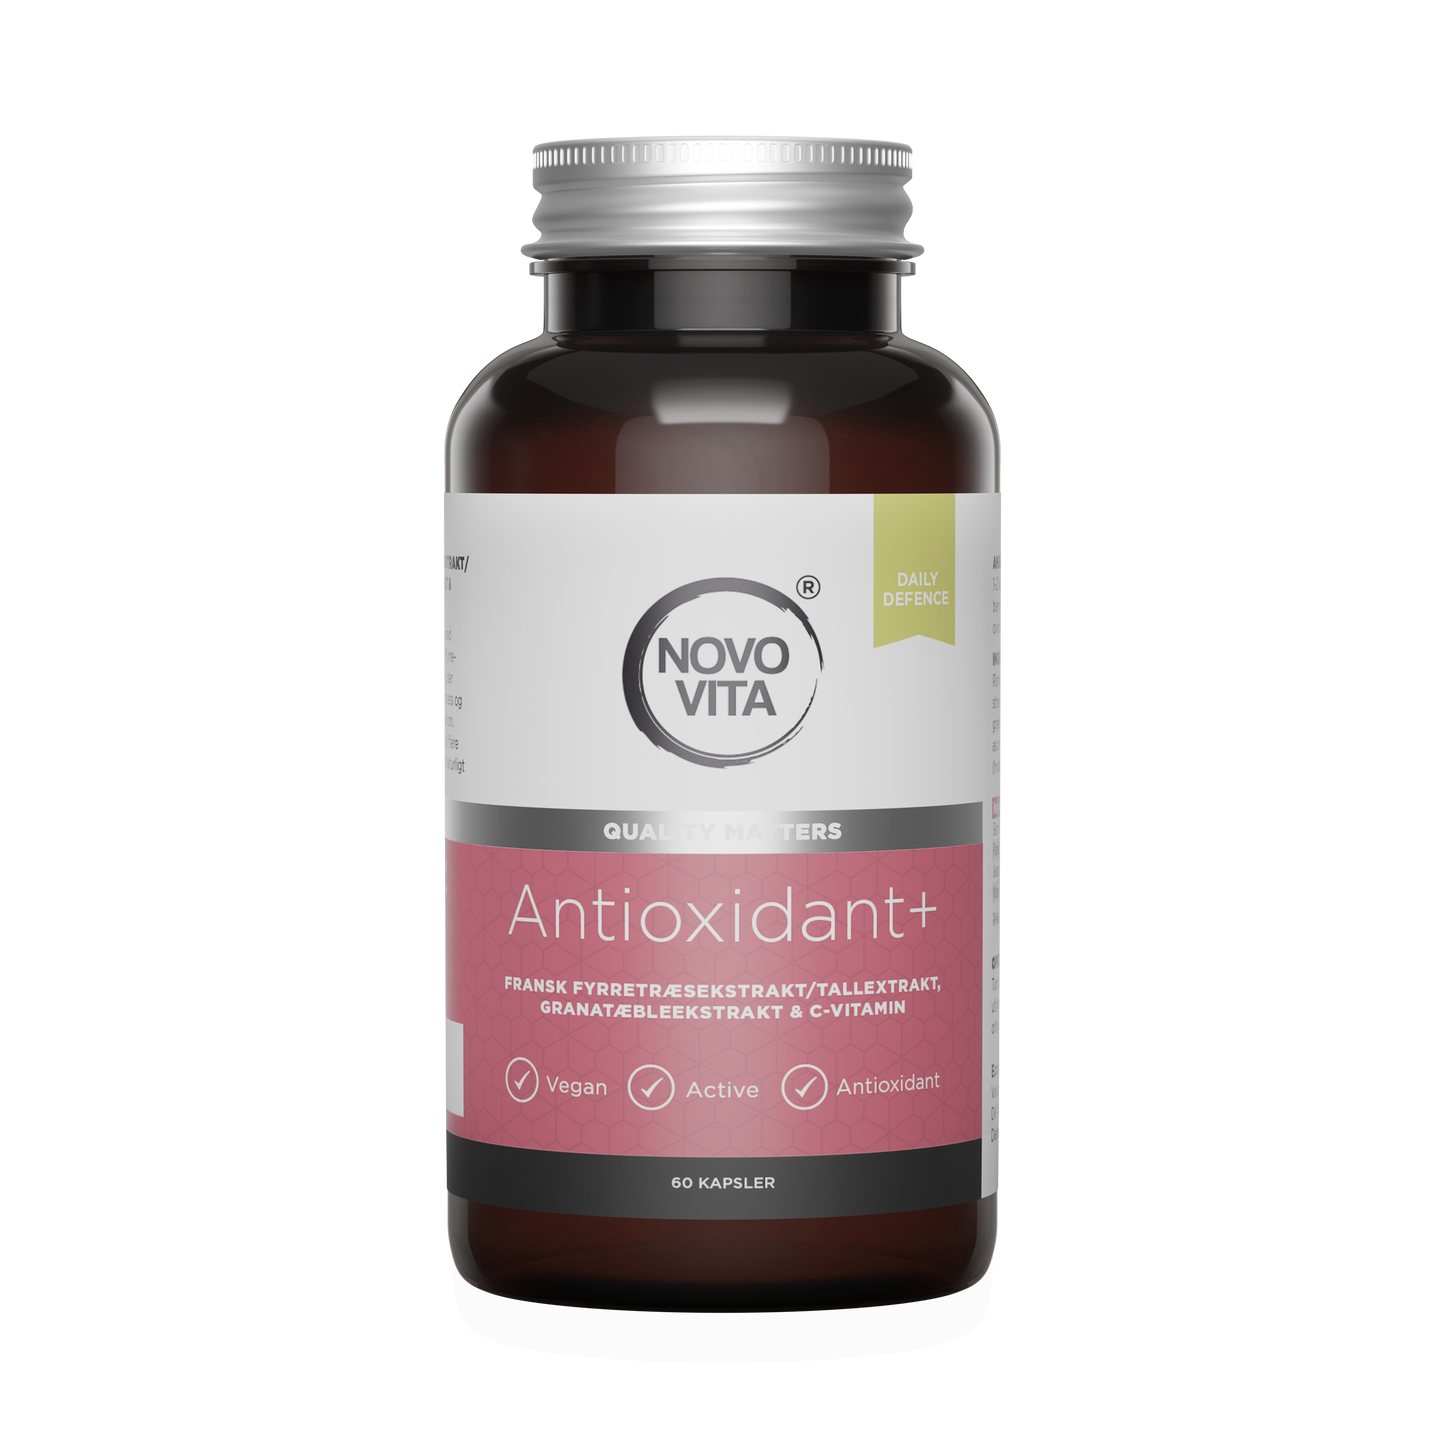 Antioxidant+*